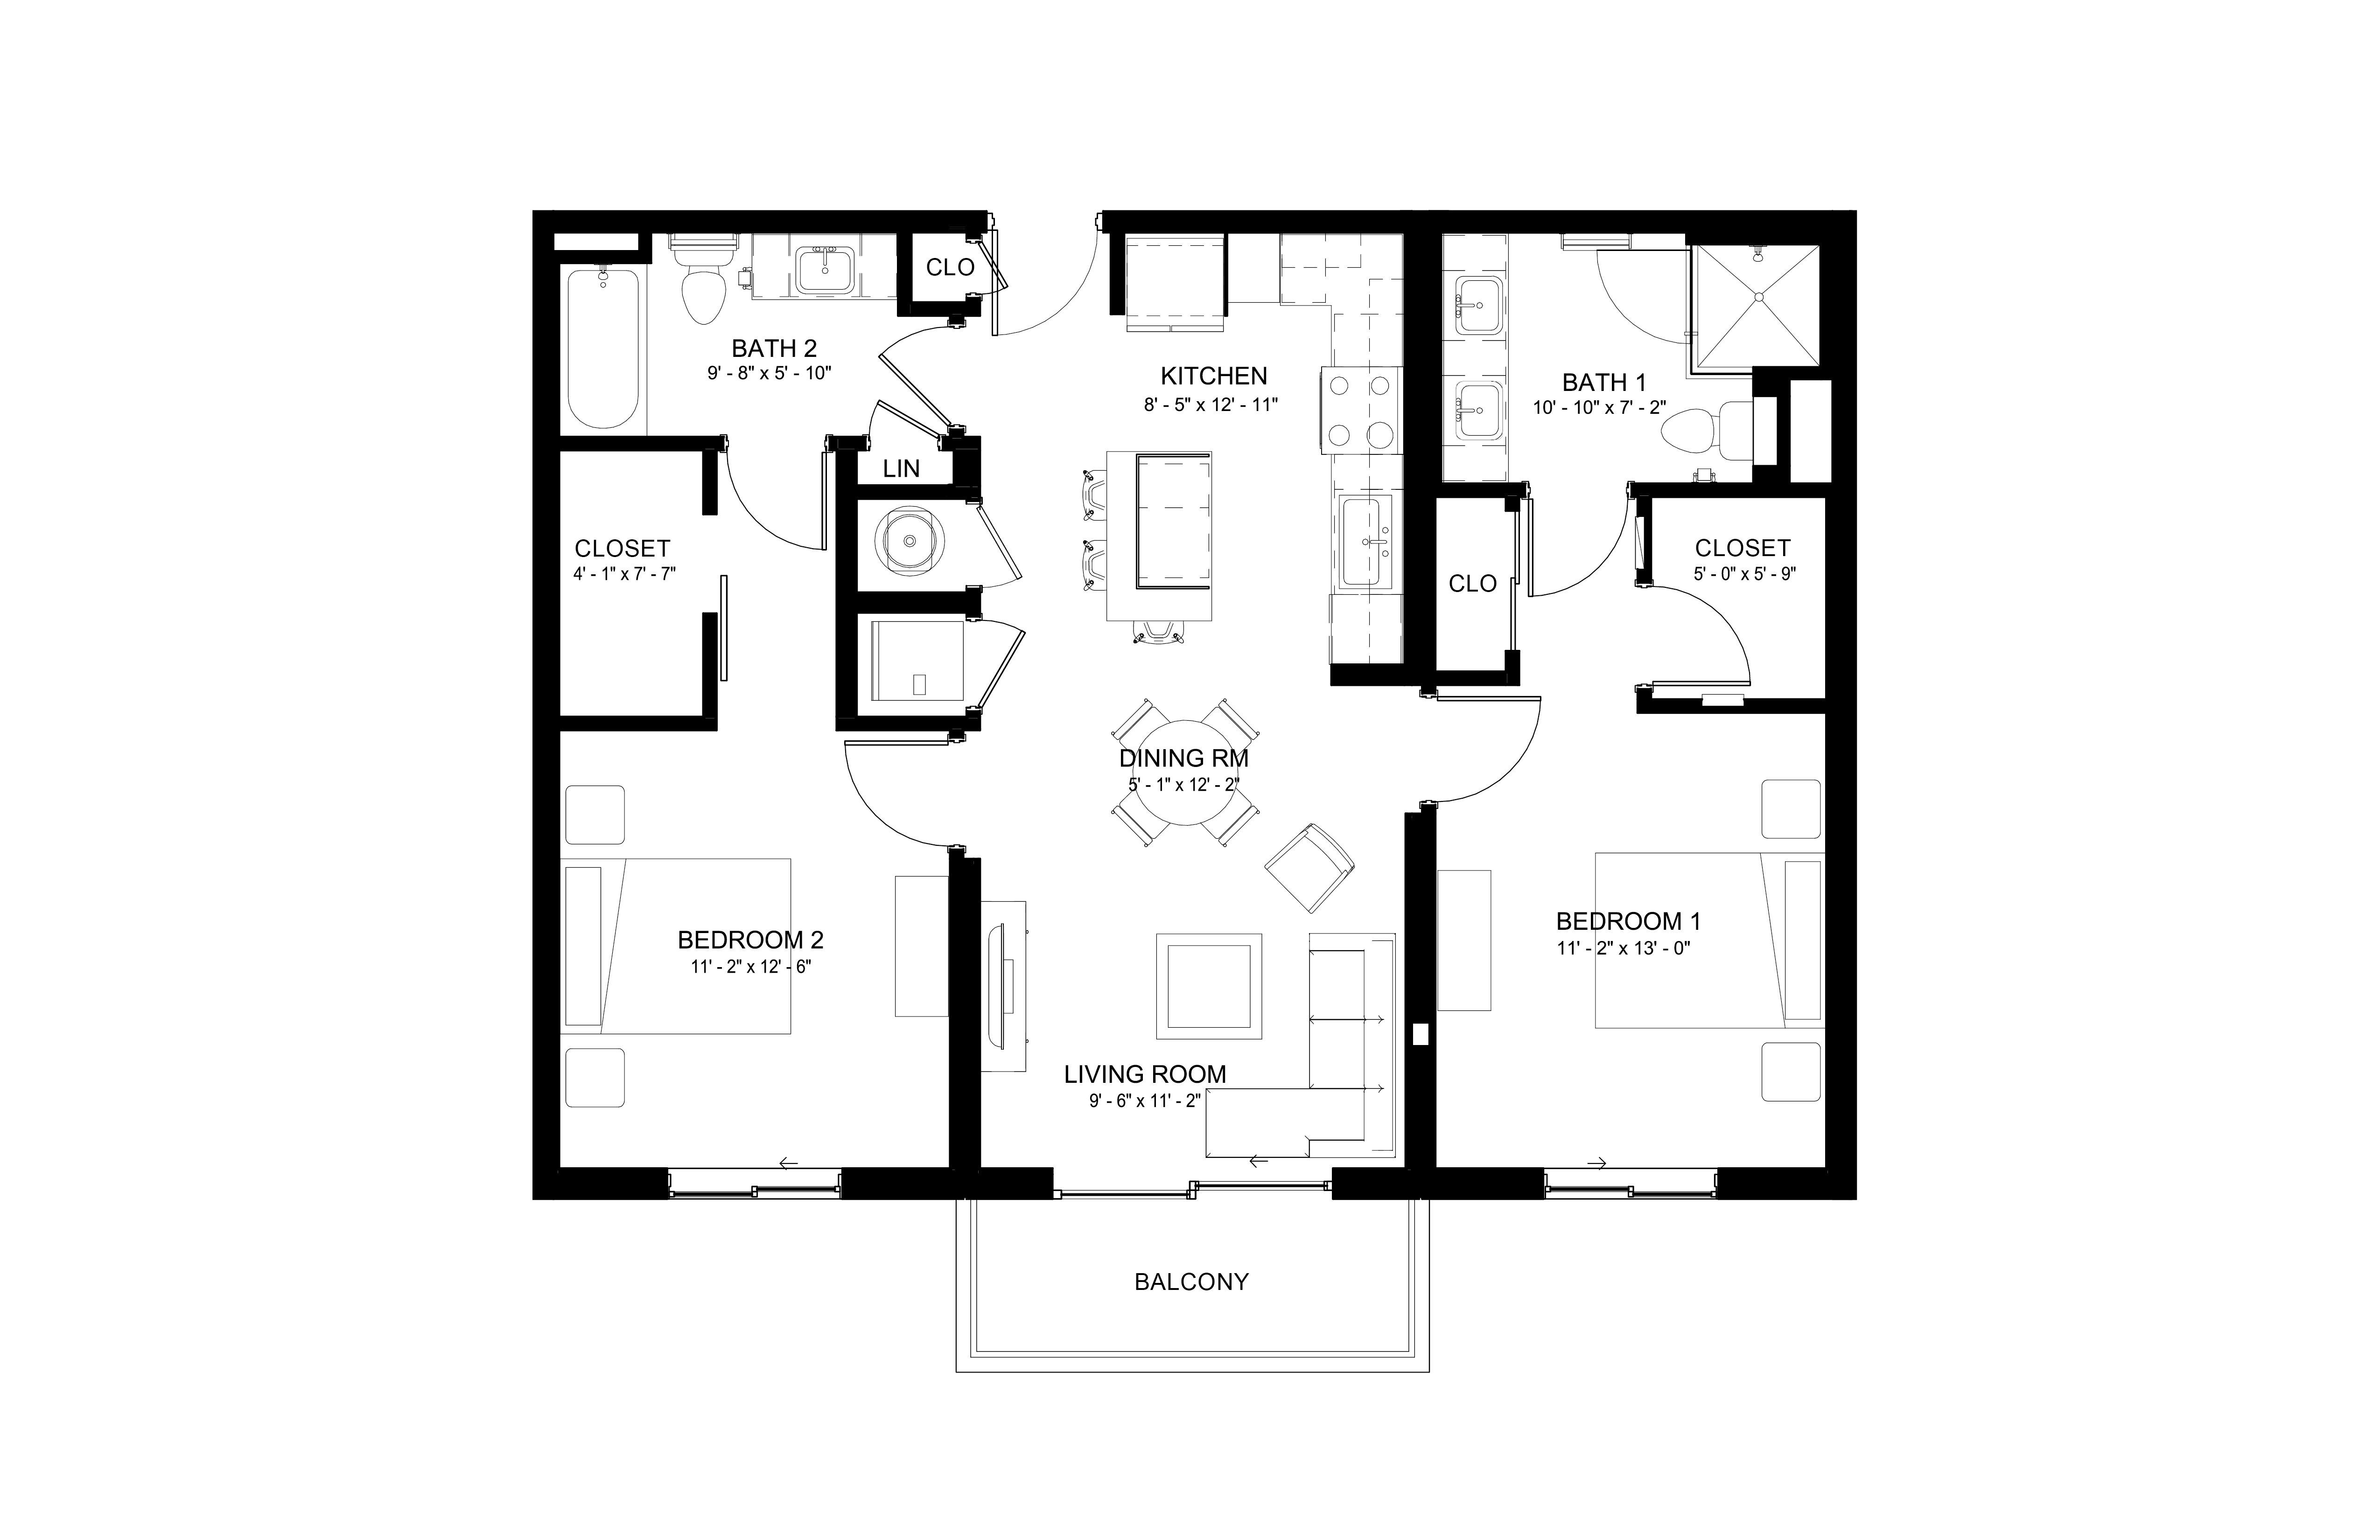 Apartment 118 floorplan